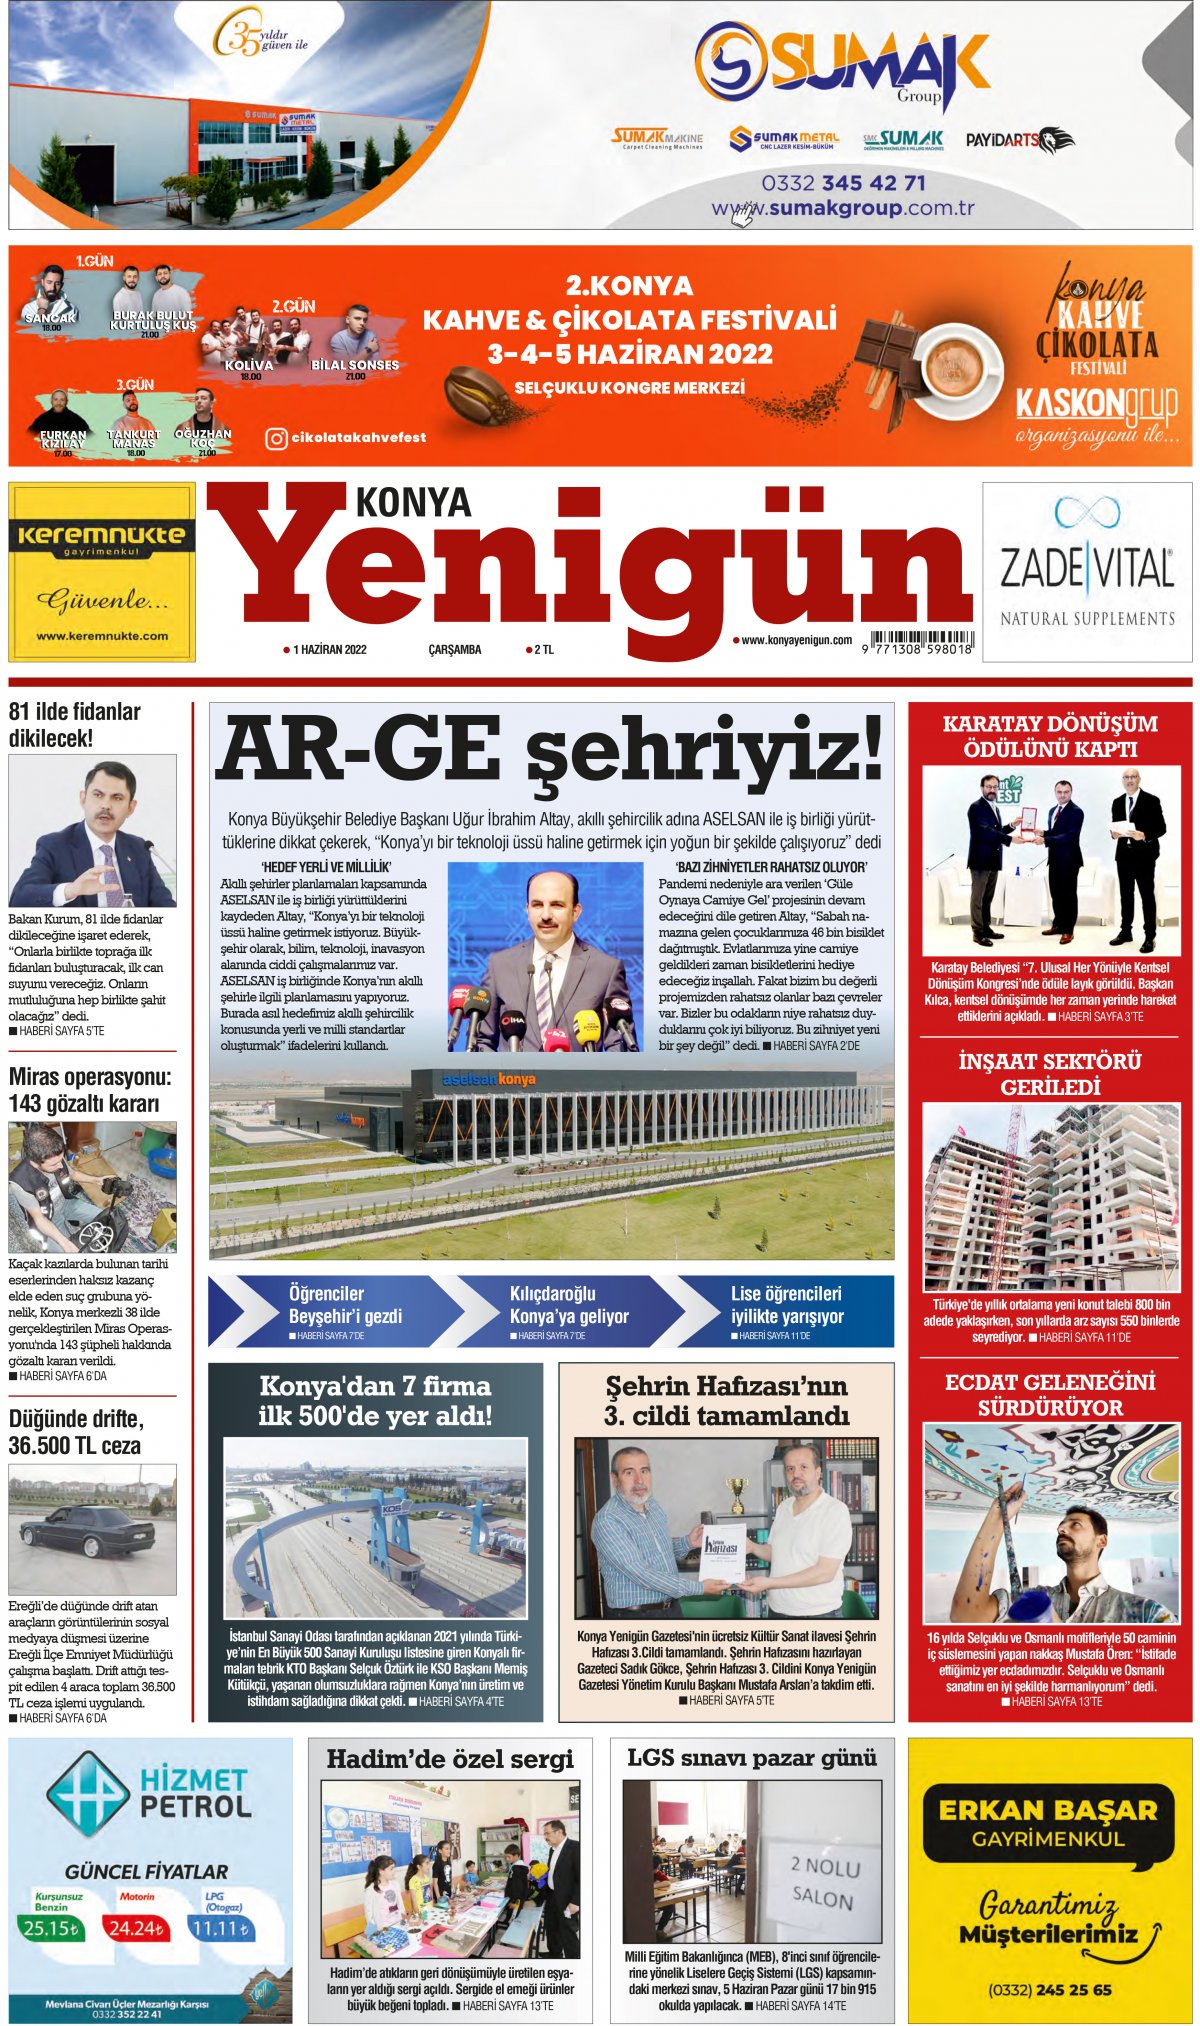 Konya Yenigün Gazetesi - 01.06.2022 Manşeti